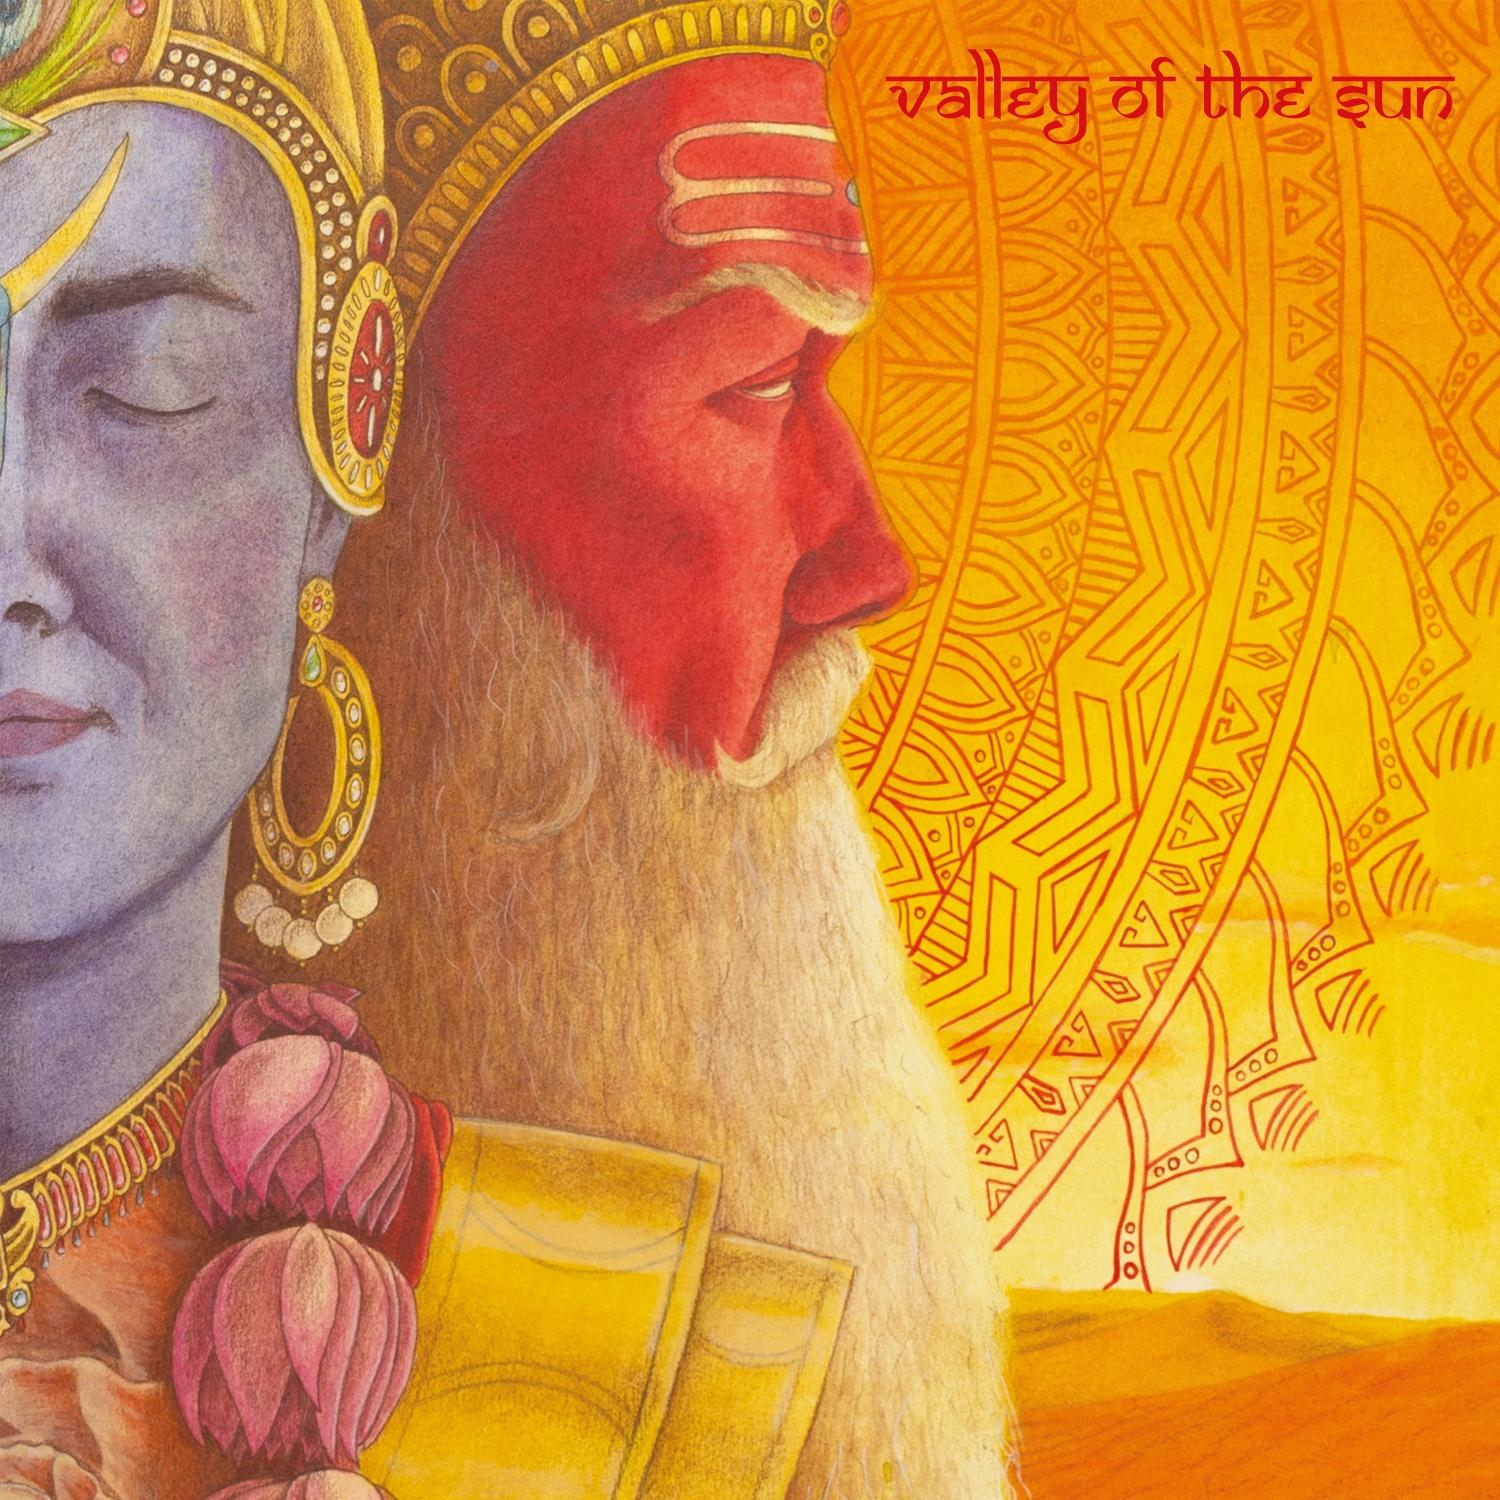 The Gods Old Valley Of (Black - - (Vinyl) Vinyl) Sun